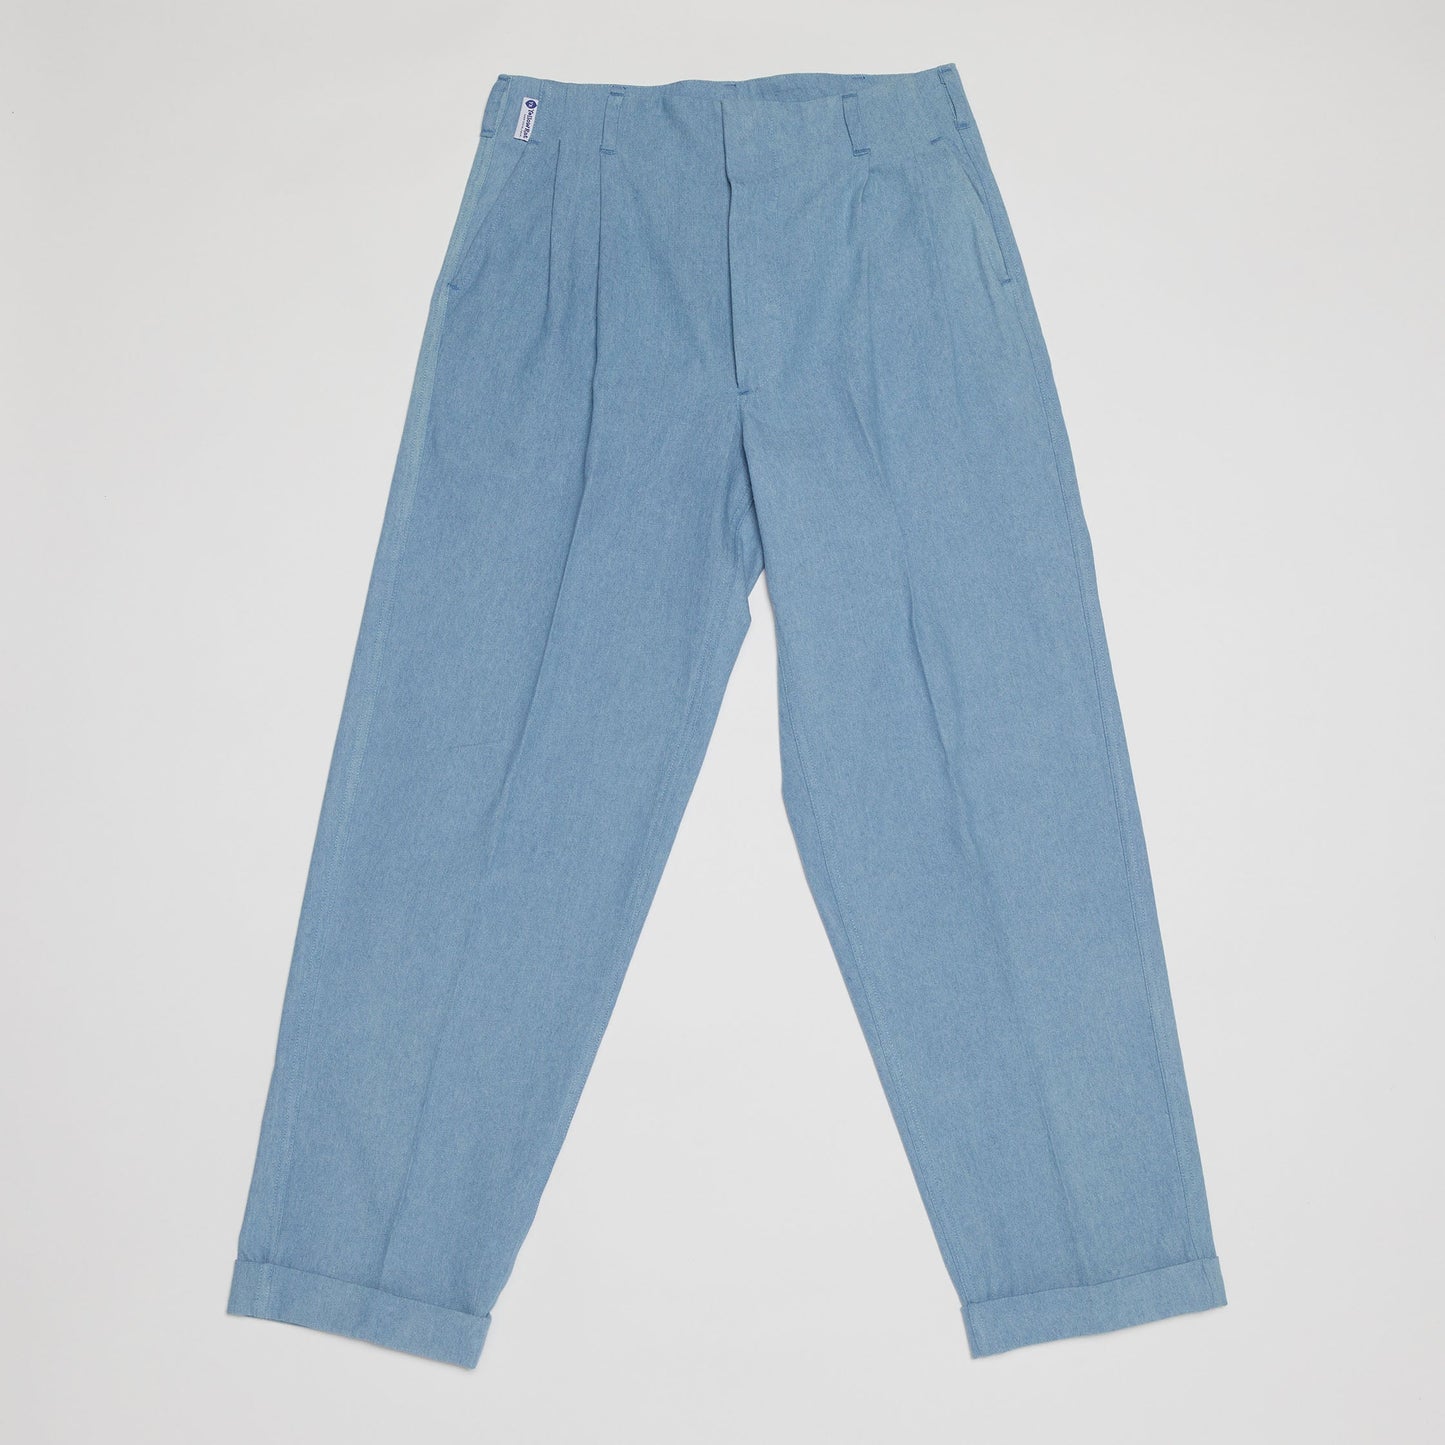 Peg-top Pants (Light Blue)